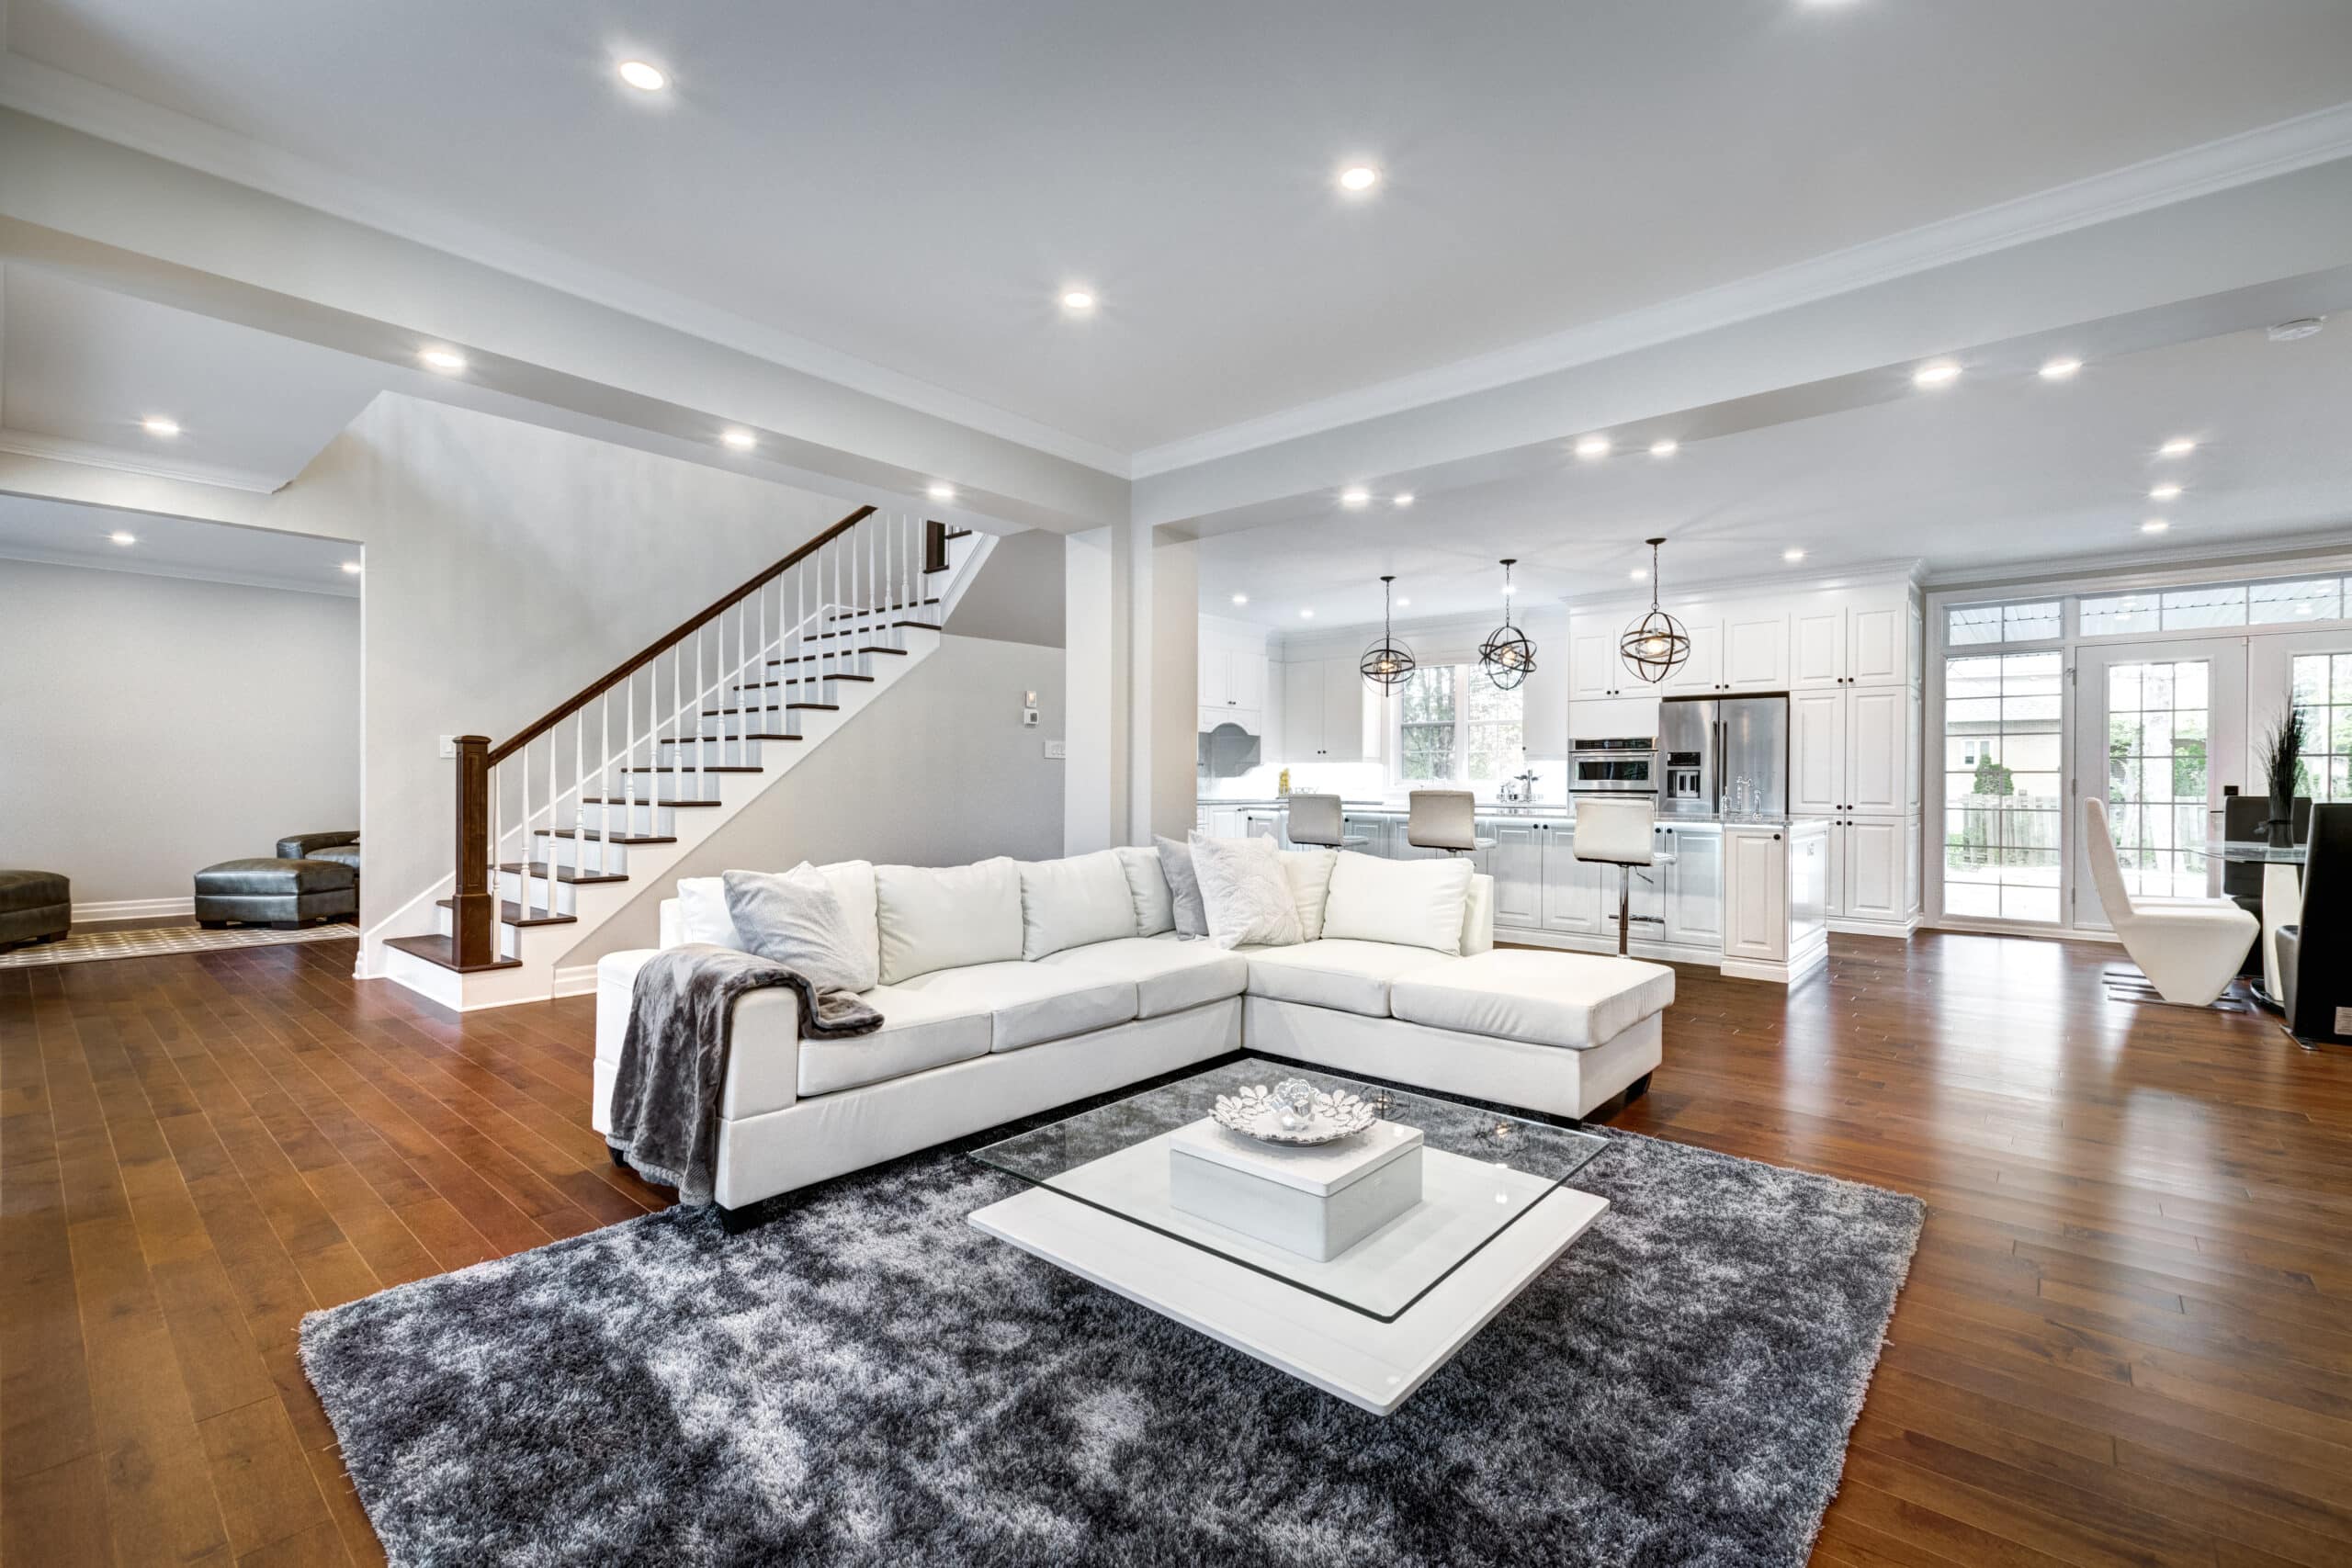 Elegant living room with wood flooring